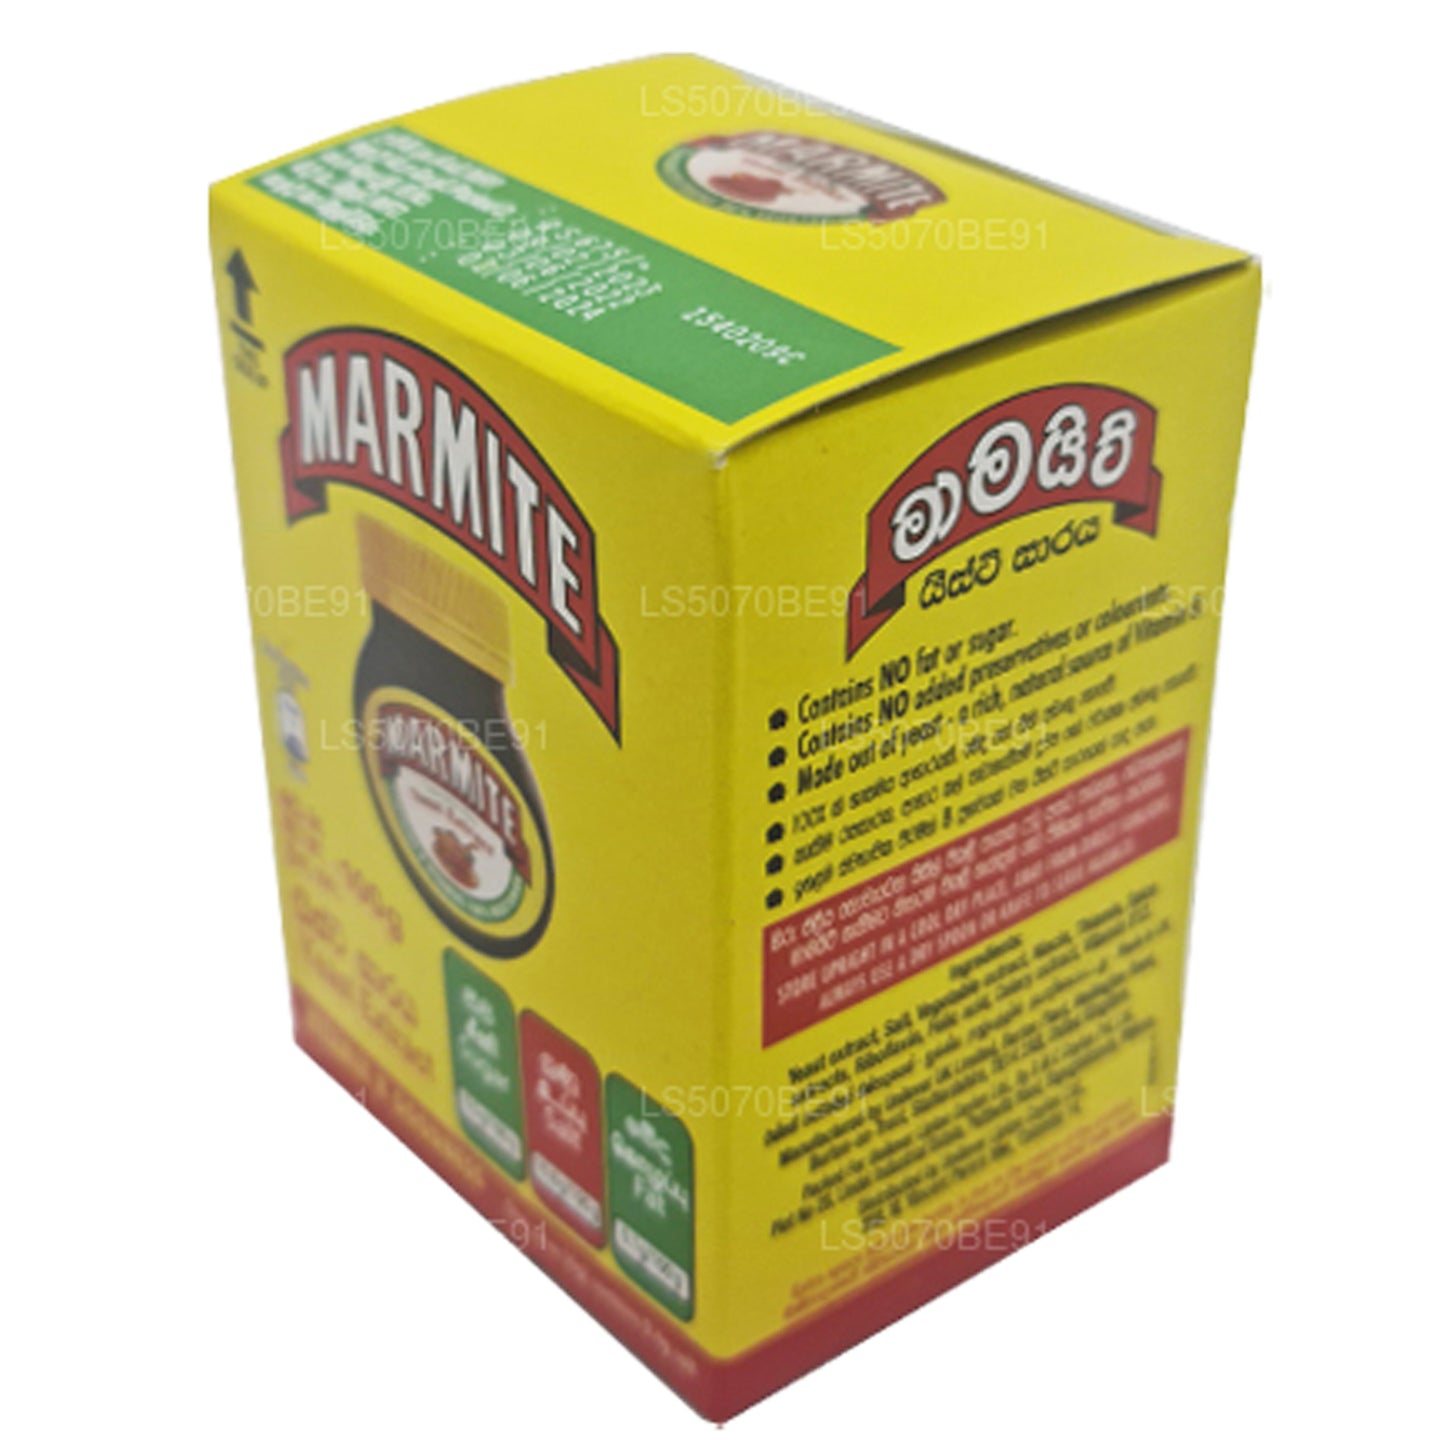 Marmite Yeast Extract (100g)